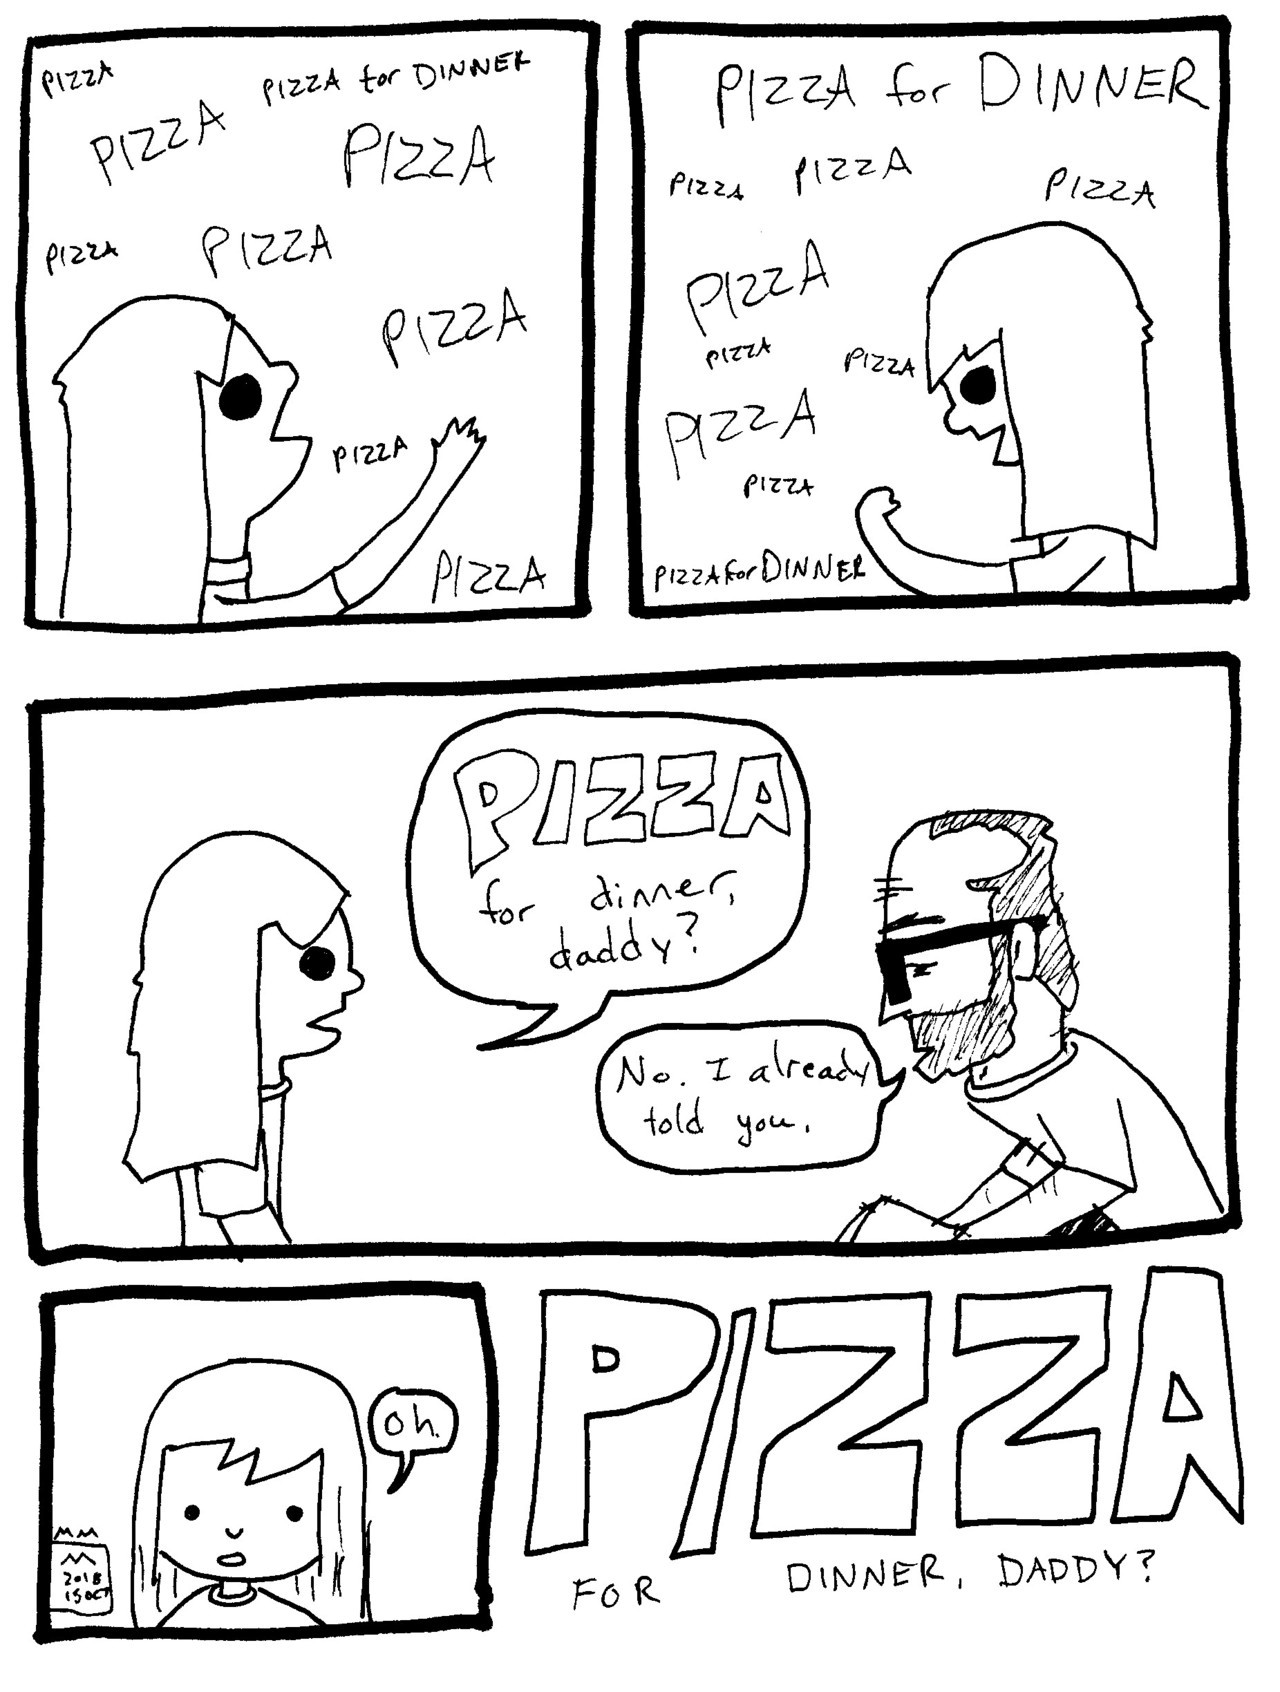 lost guns v2 #467 - pizza check out more of my comics @ mini dove comics, @retail-comics, & @sketchesmick . Like the facebook page for more comic fun